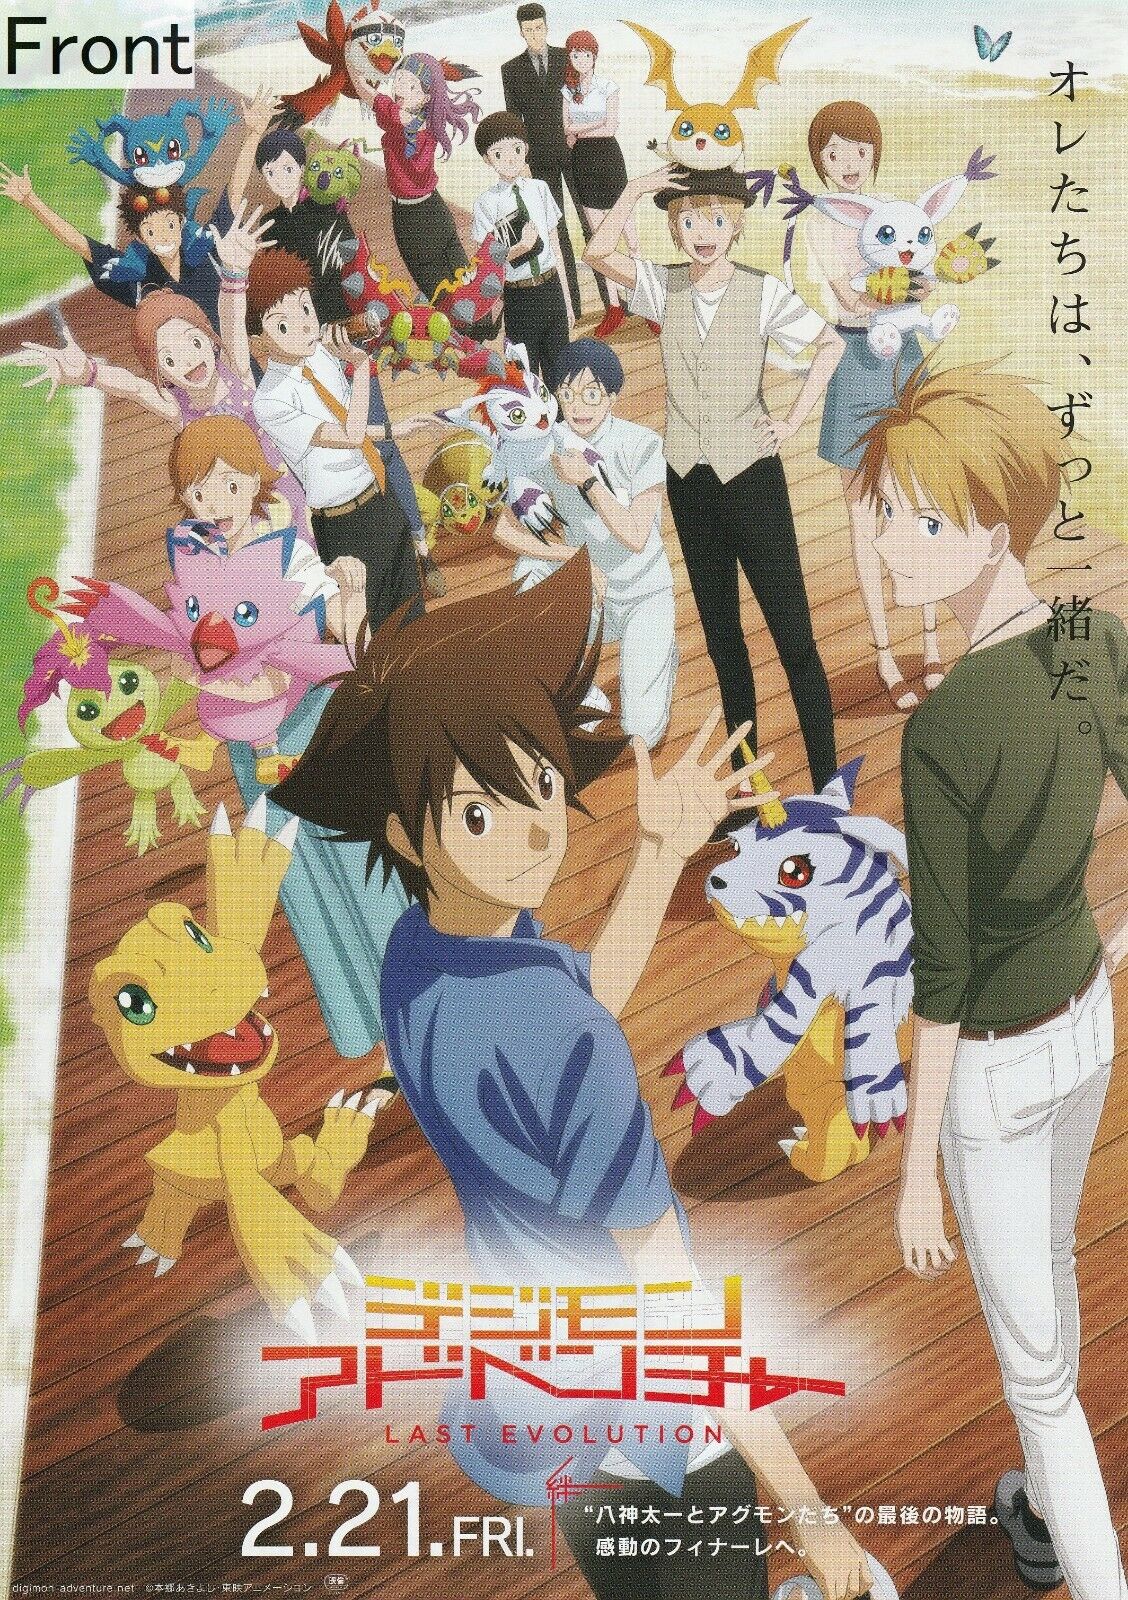 Digimon Adventure: Last Evolution Kizuna Promotional Poster TypeB